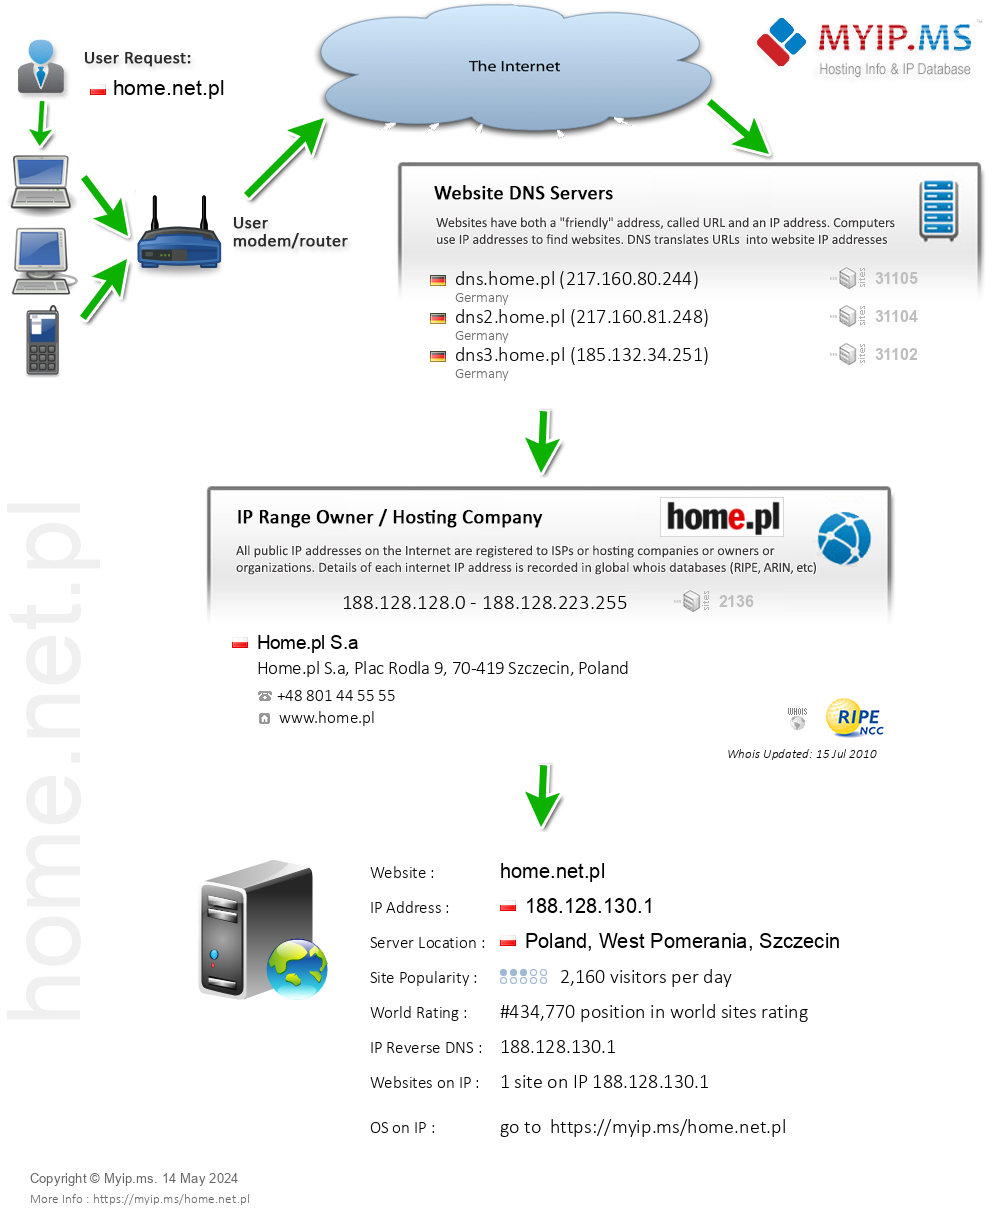 Home.net.pl - Website Hosting Visual IP Diagram